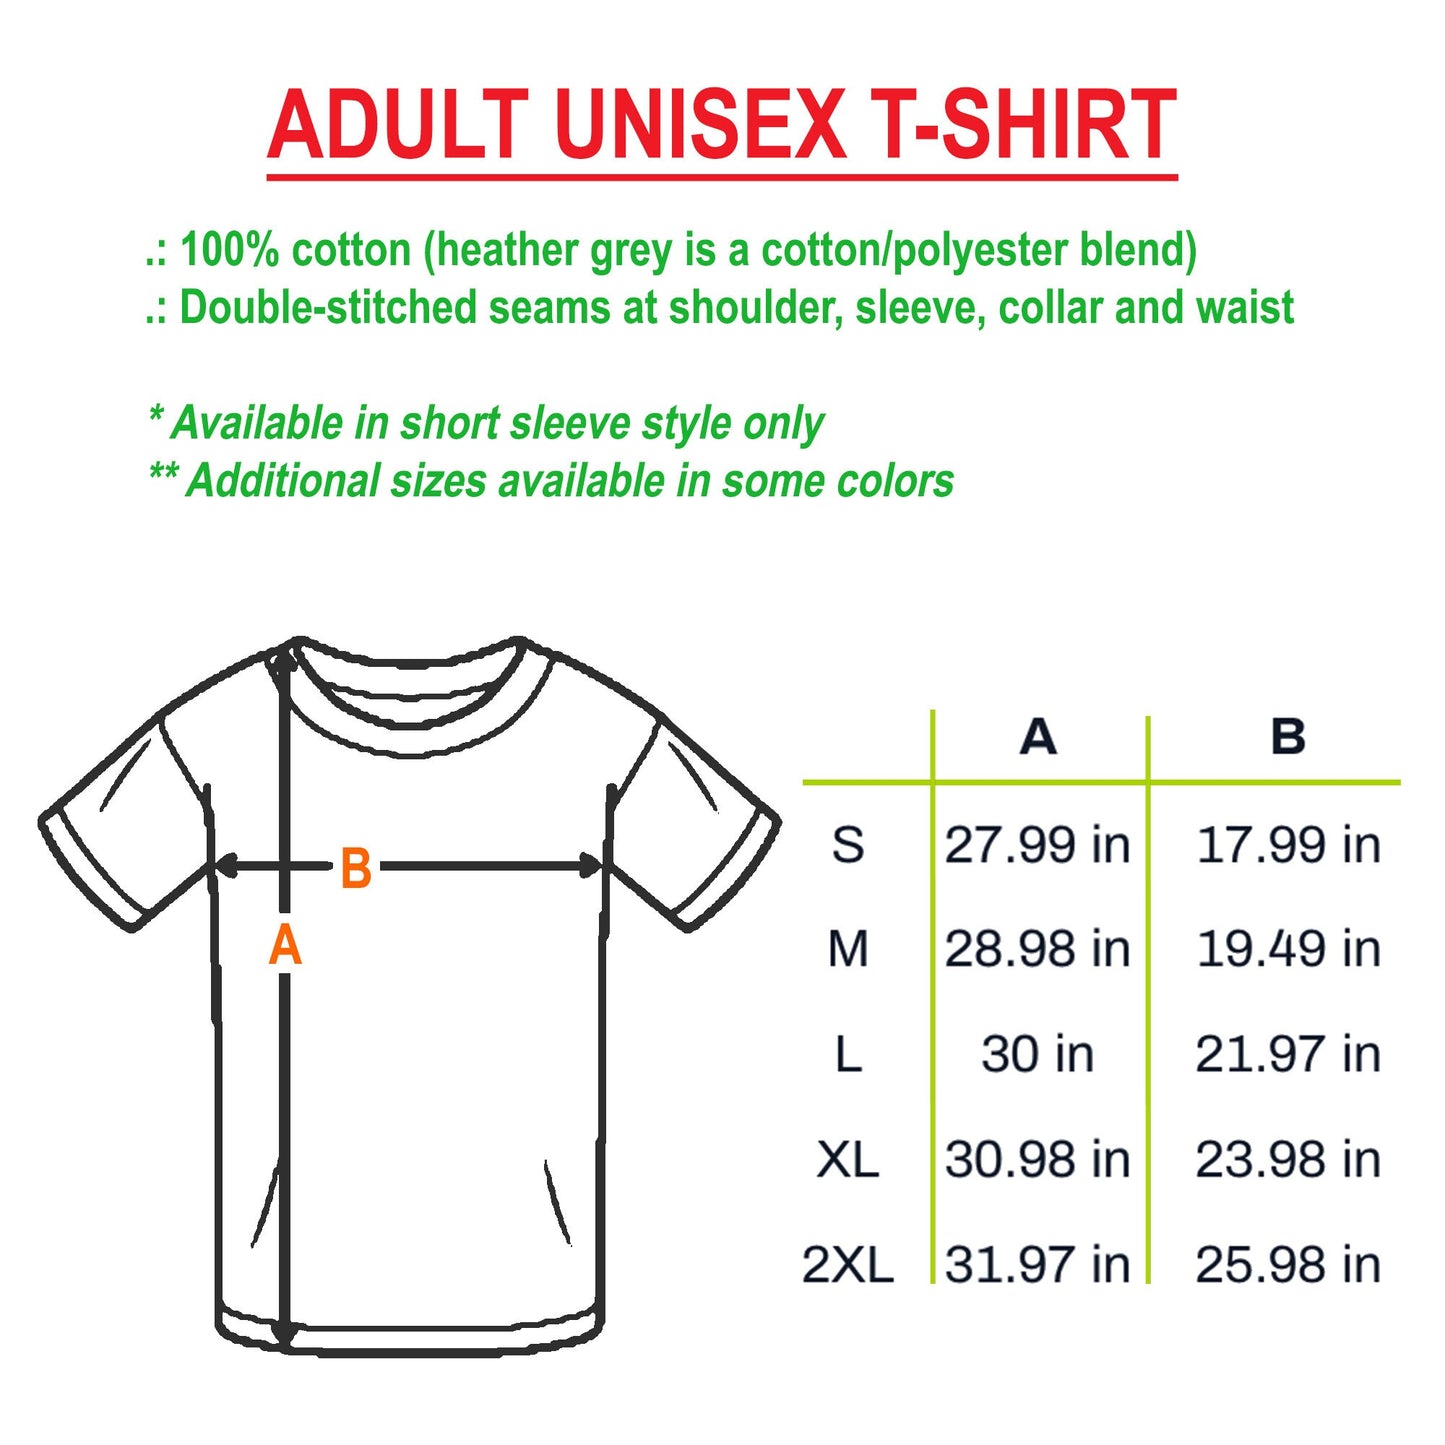 Lil Boo Thang Shirt, Retro Ghost Shirt, Fall Vibes Shirt, Funny Text Shirt, Halloween Tee Shirt, Trick or Treat Shirt, Halloween Boo Shirt